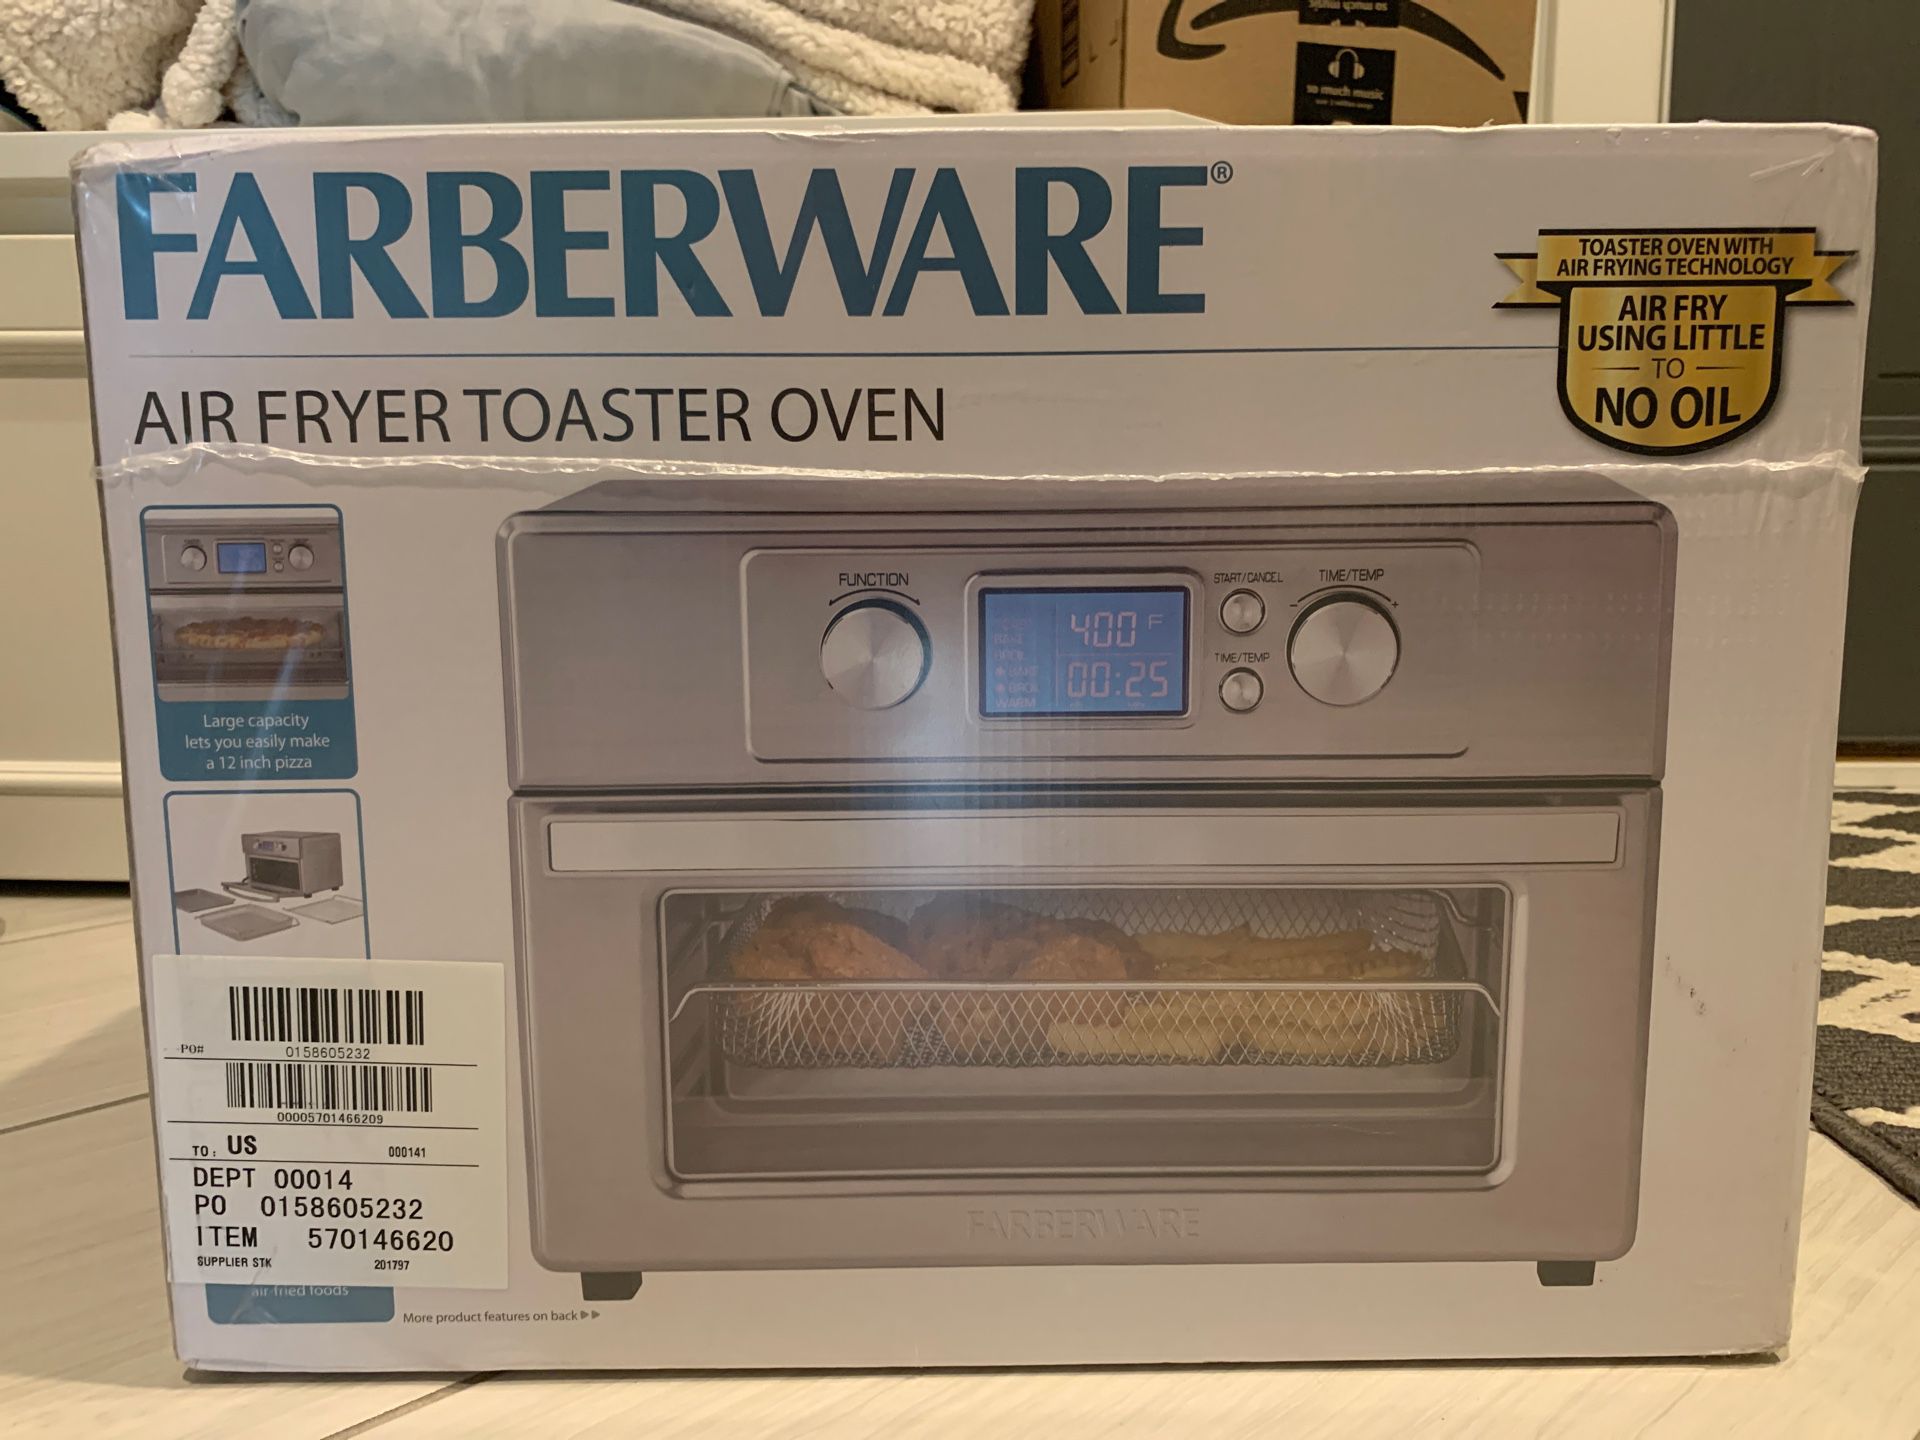 Faberware Air Fryer Toaster Oven